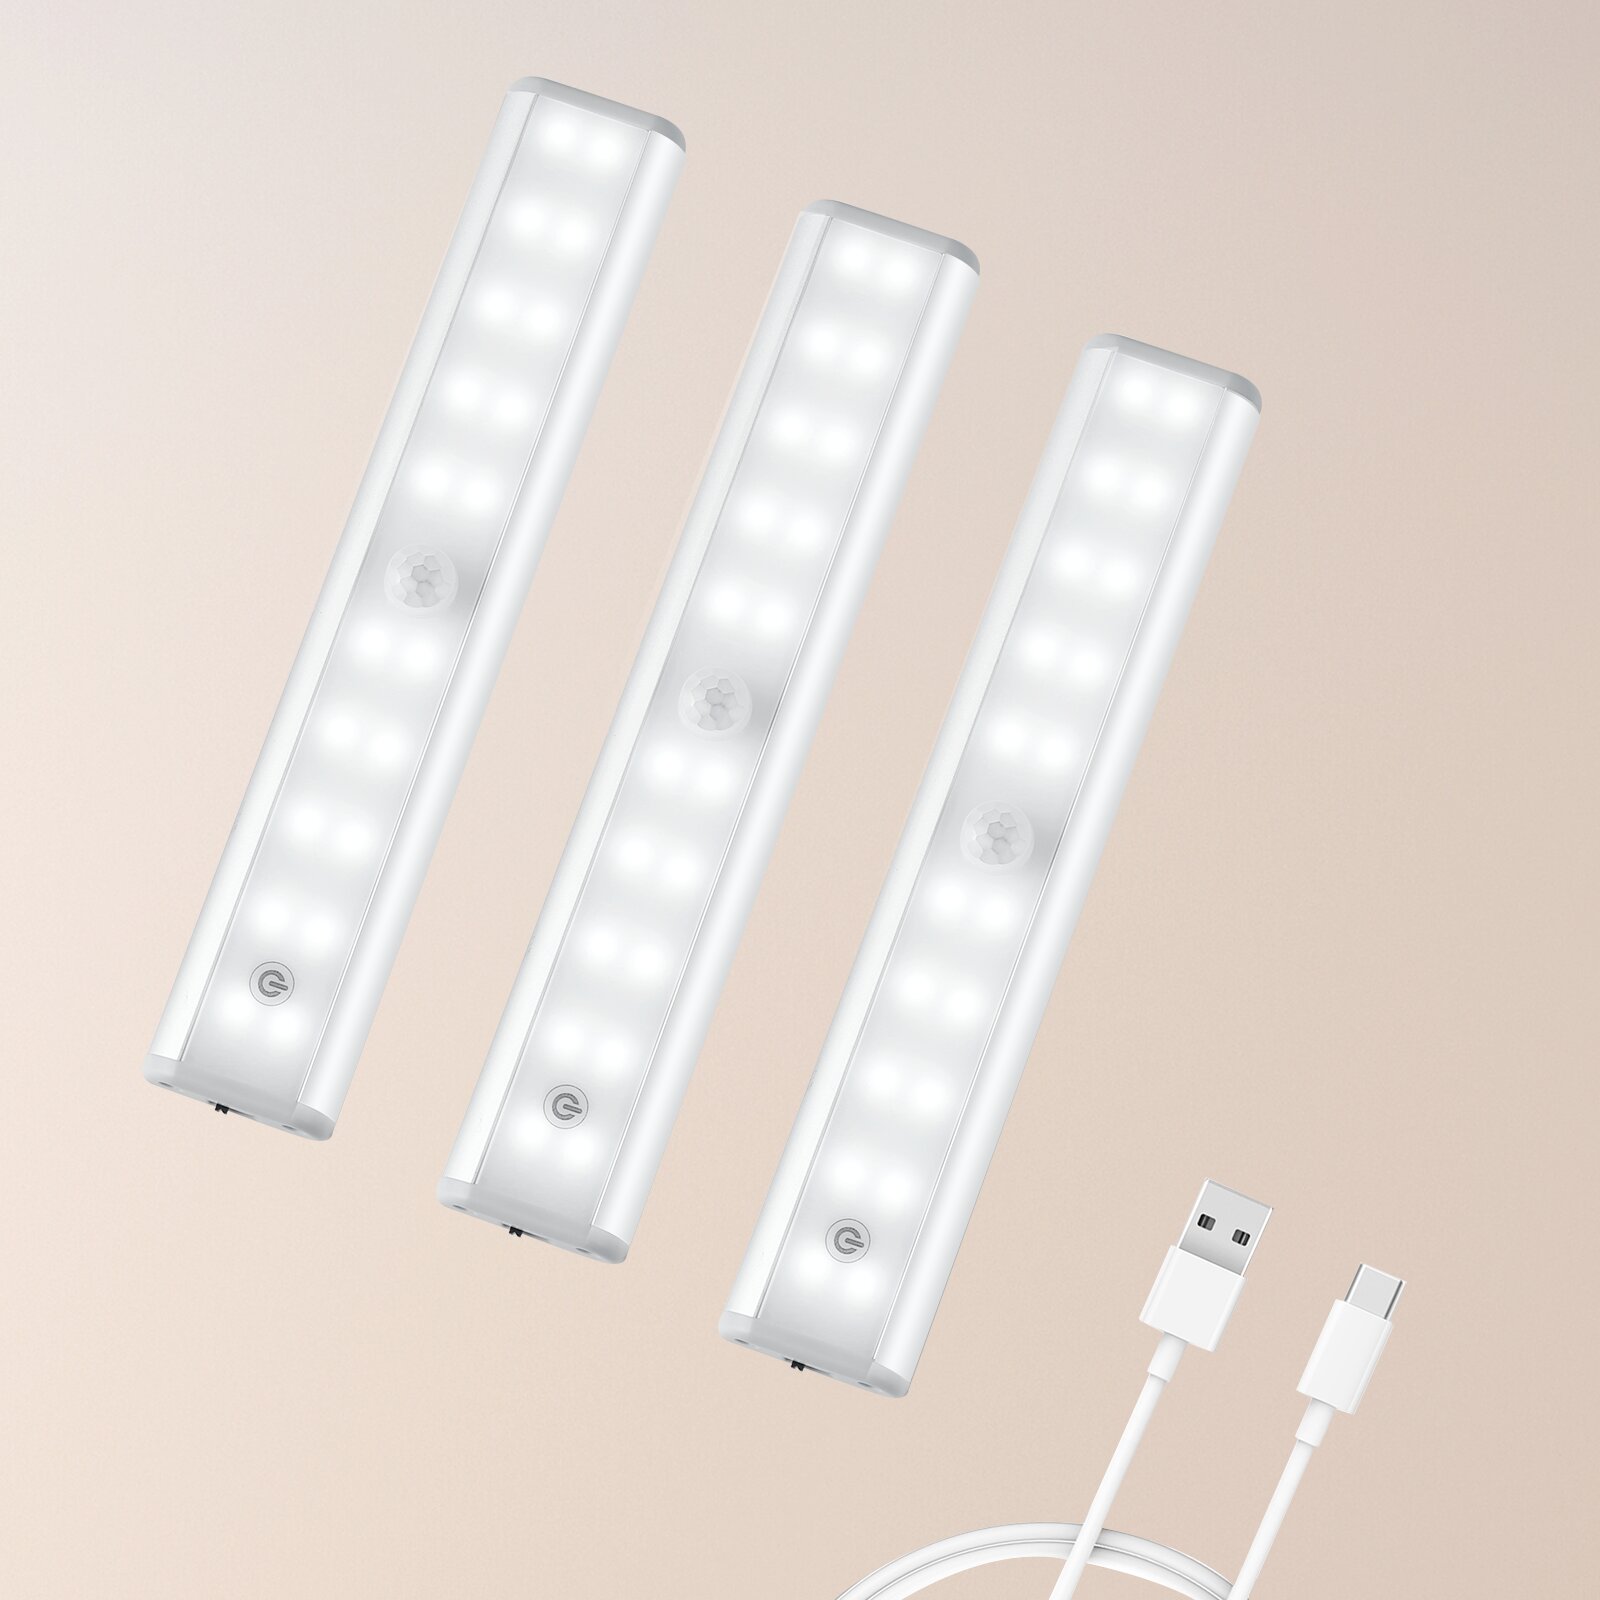 7 LED Motion Sensor Light USB Rechargeable 4 Pack Light LED Closet Light 